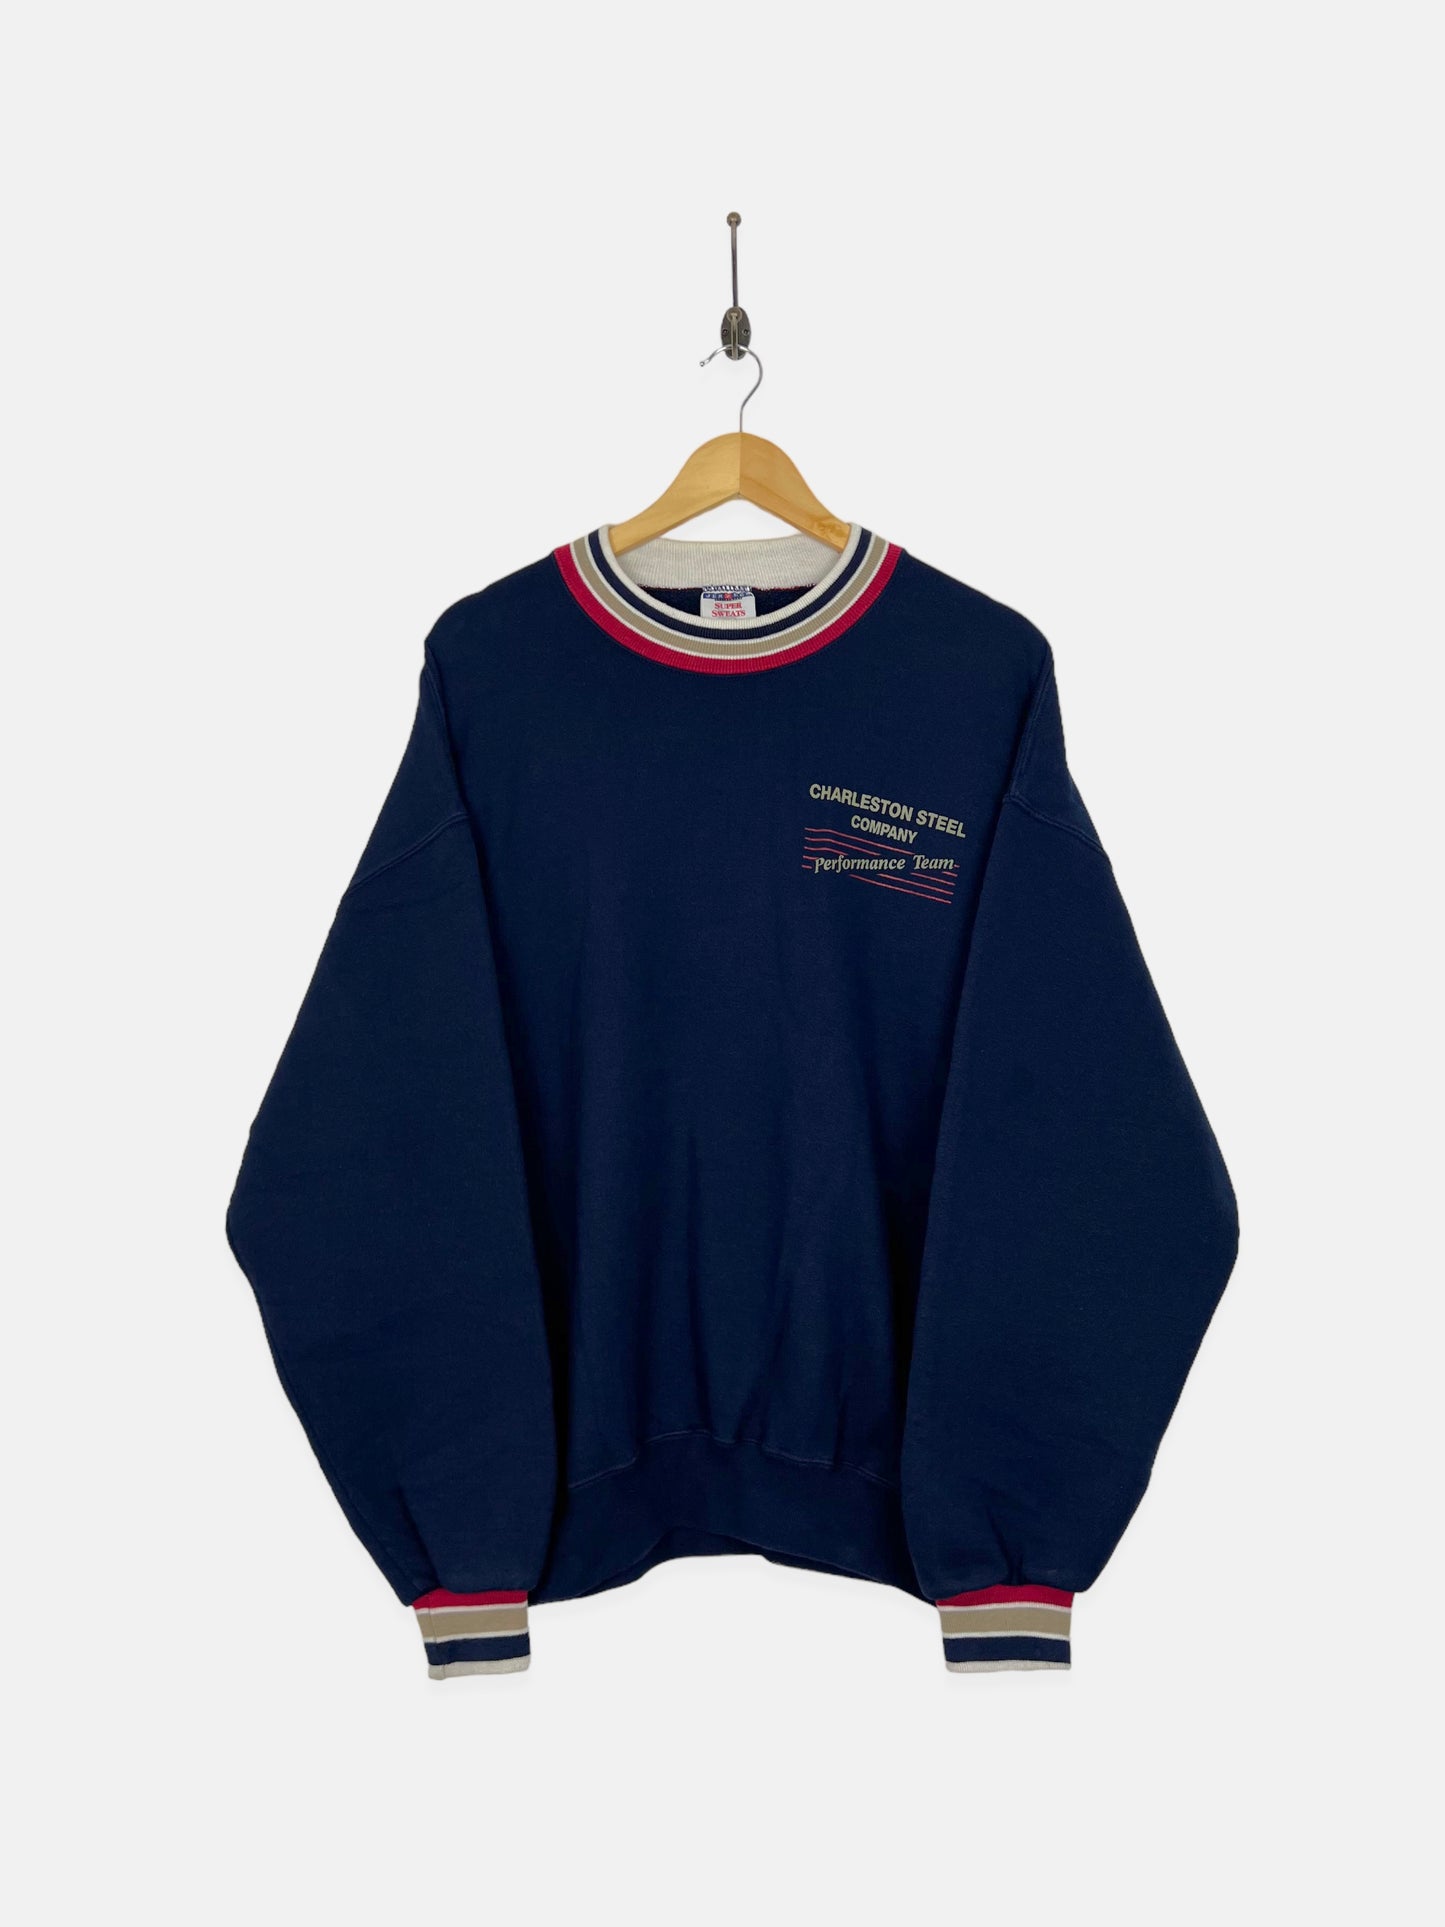 90's Charleston Steel Company USA Made Vintage Sweatshirt Size L-XL